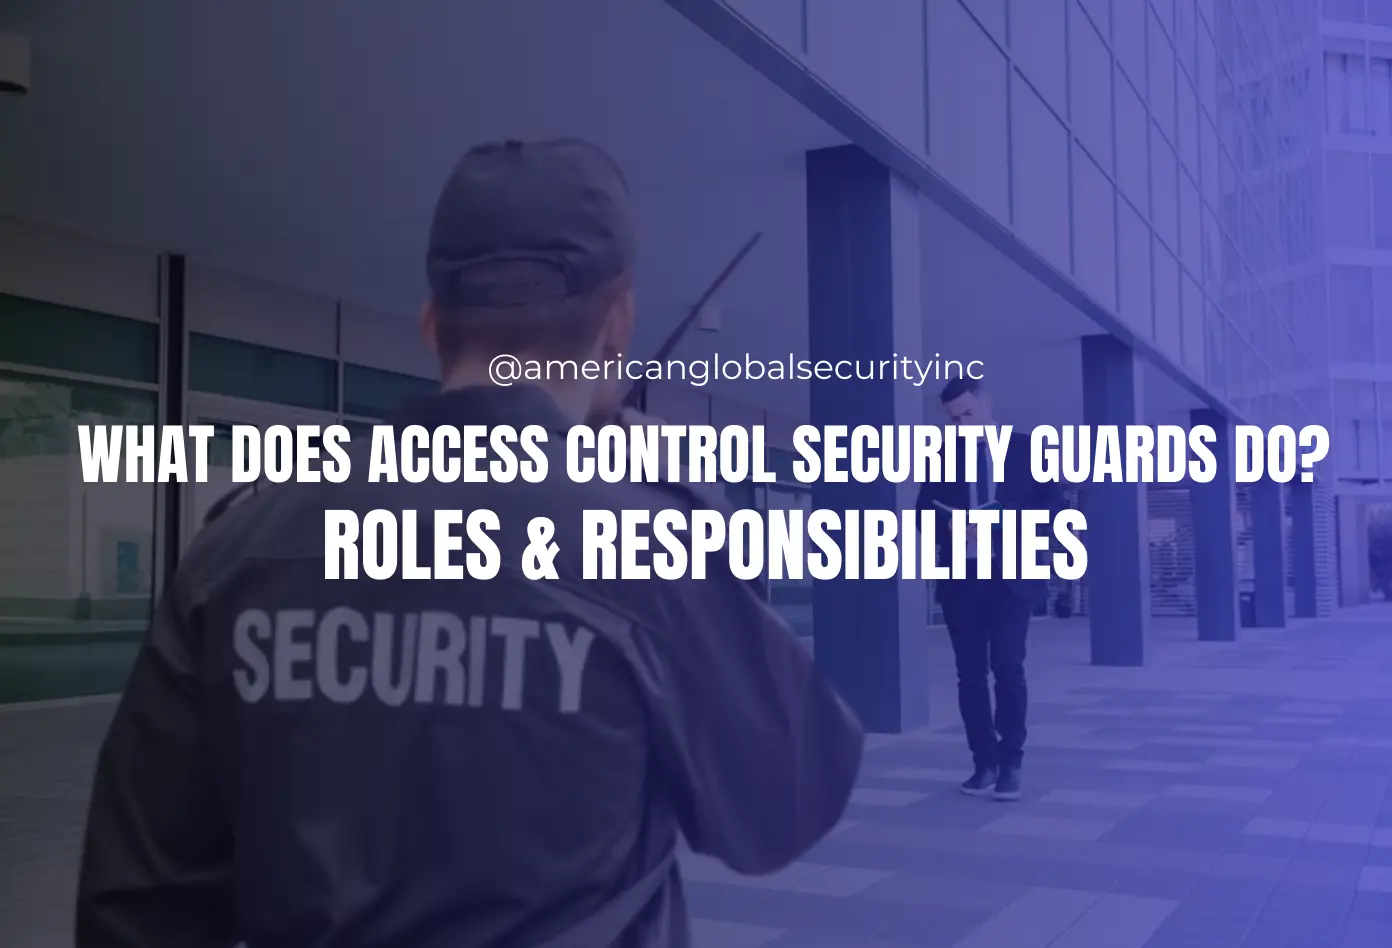 Access Control Security Guards